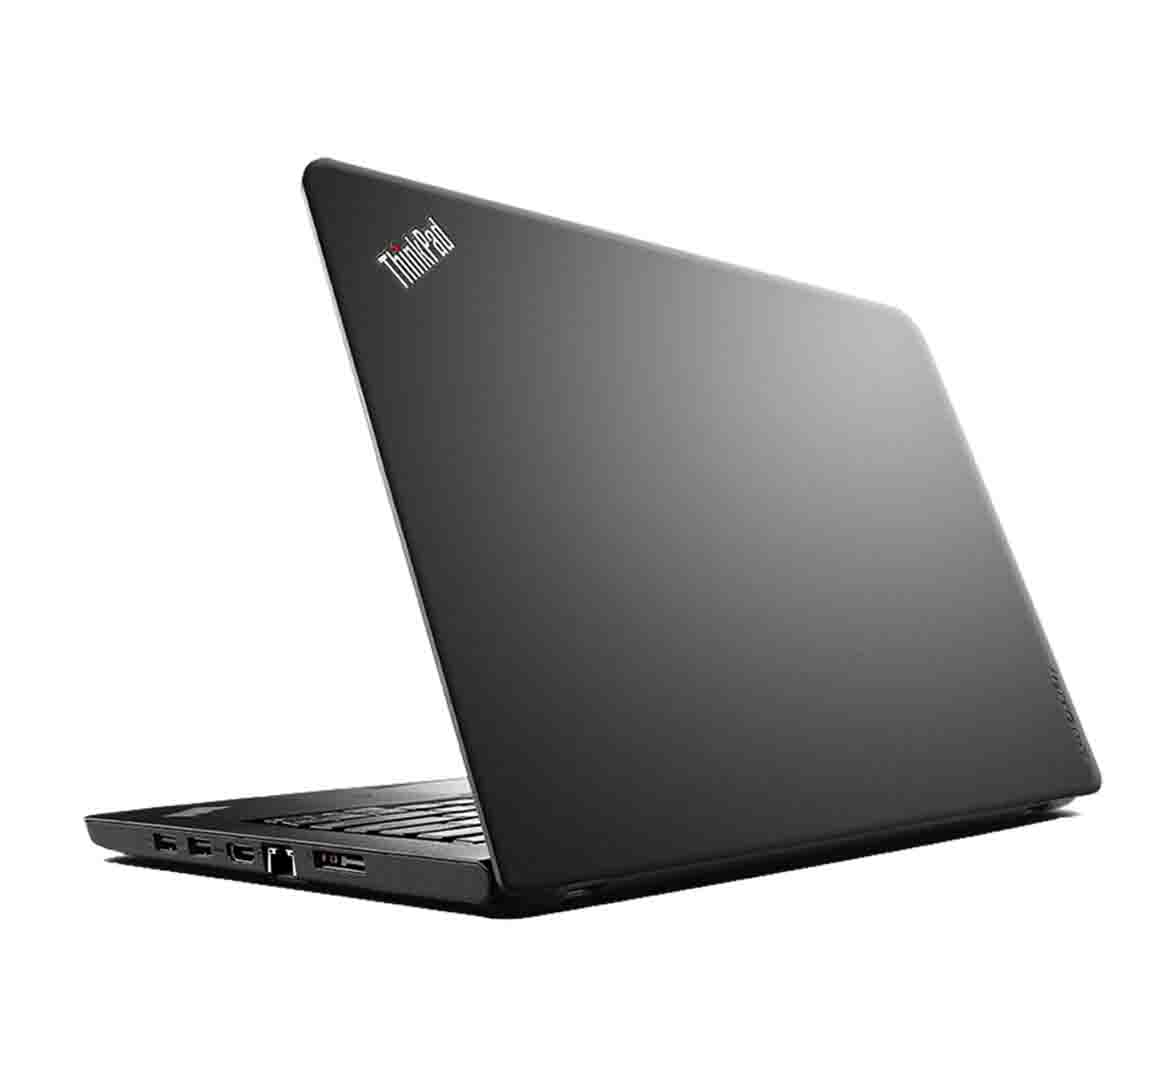 Lenovo ThinkPad E450 Business Laptop, Intel Core i3-4th Generation CPU, 8GB RAM, 256GB SSD, 14 inch Display, Windows 10, Refurbished Laptop